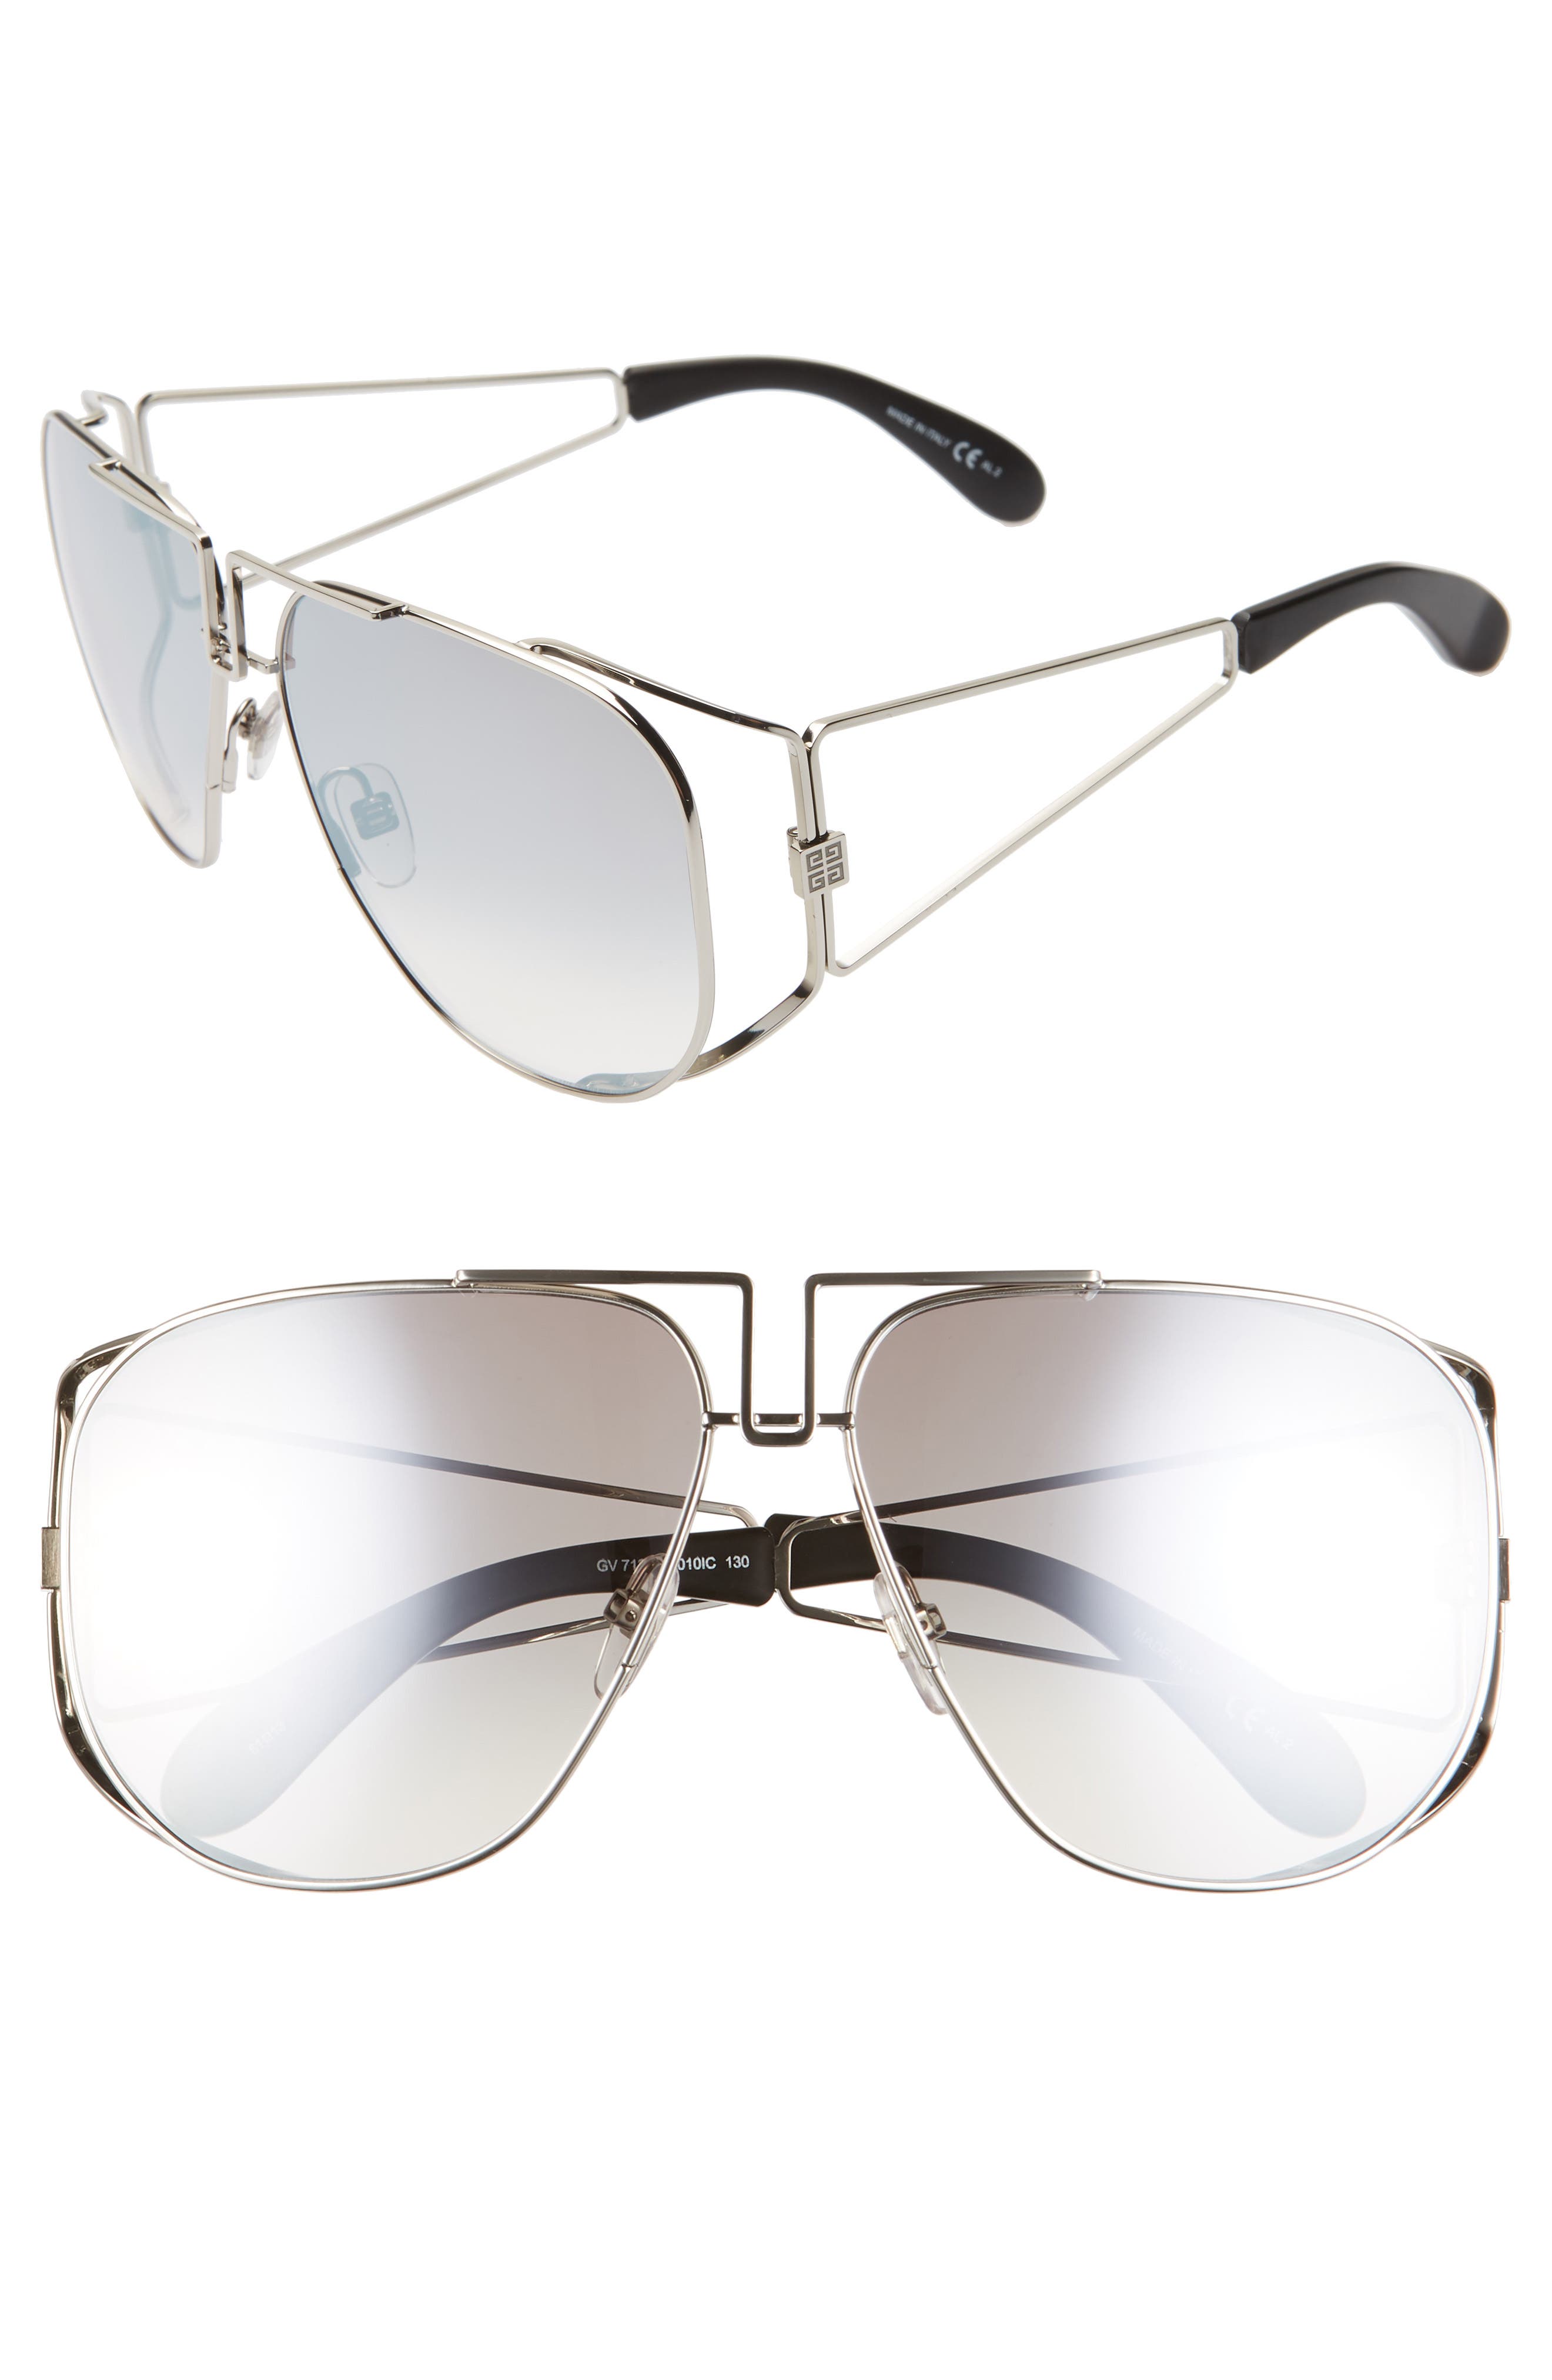 Women's Givenchy 61mm Aviator Sunglasses - Palladium